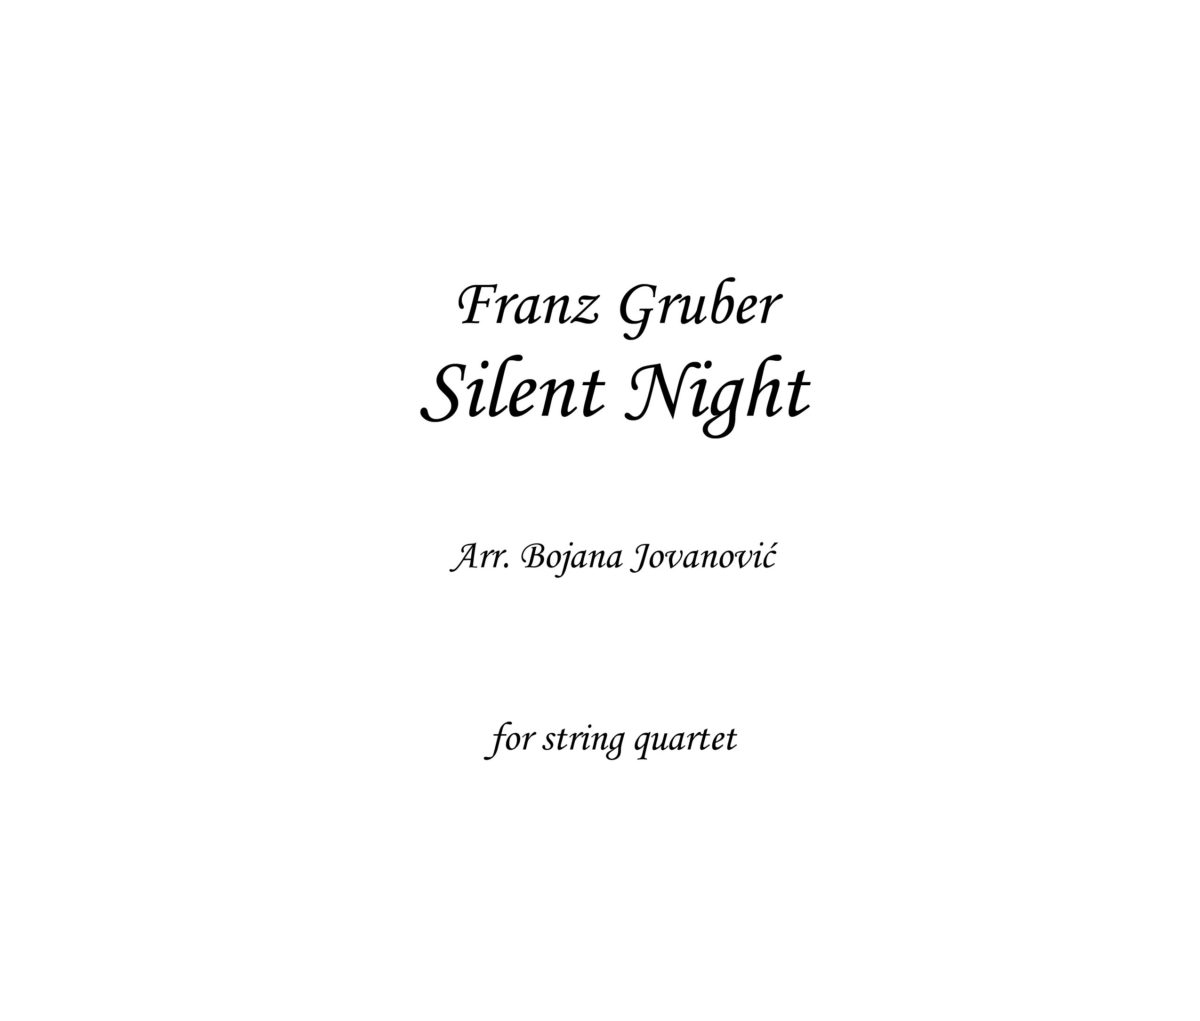 Silent Night (Christmas song) - Sheet Music